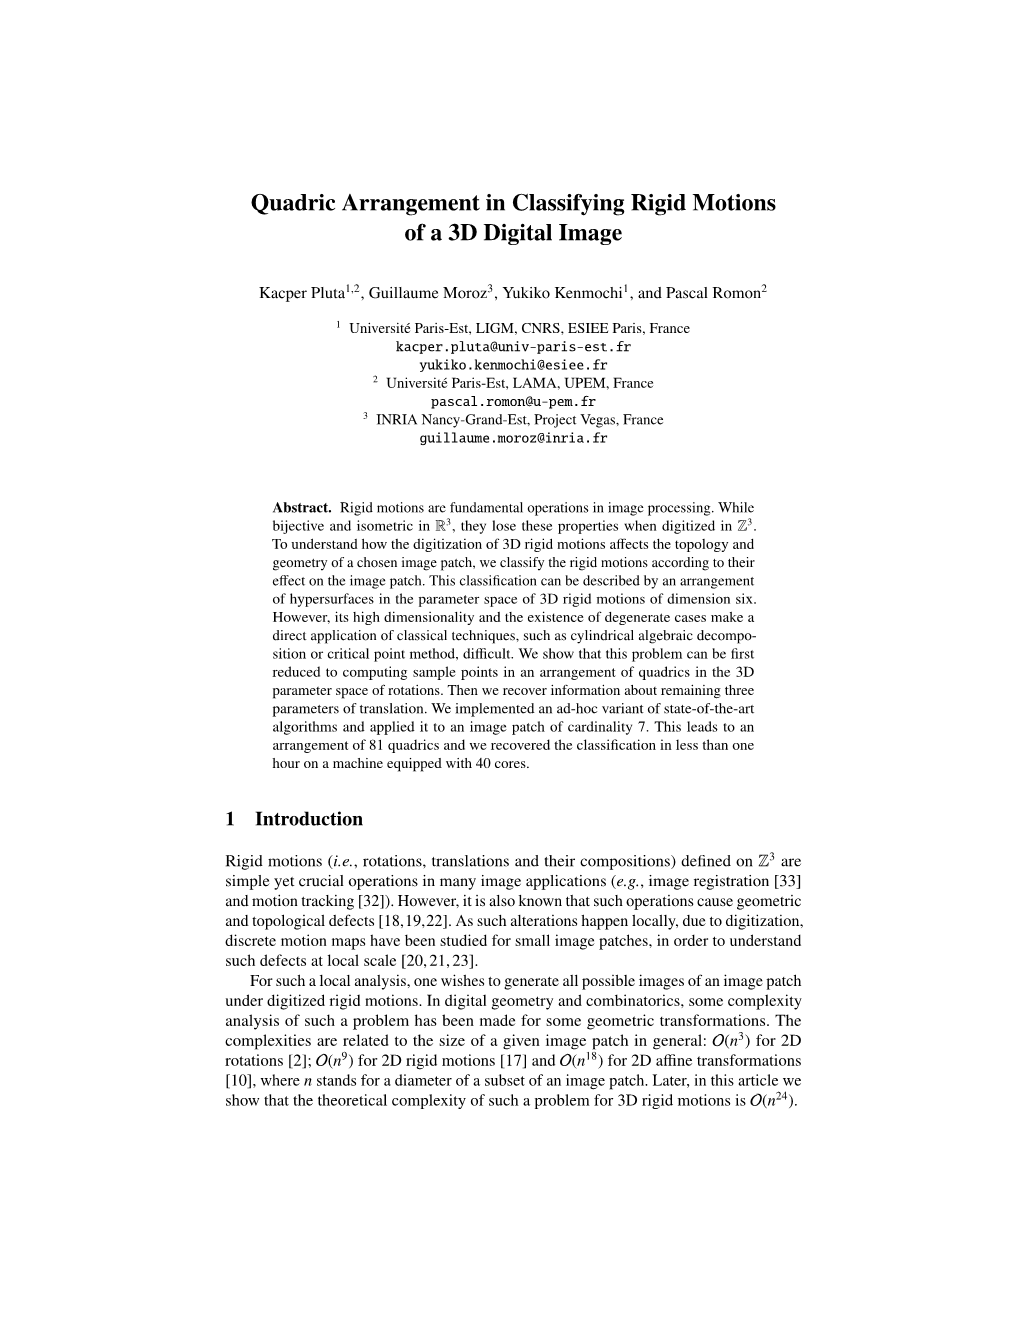 Quadric Arrangement in Classifying Rigid Motions of a 3D Digital Image